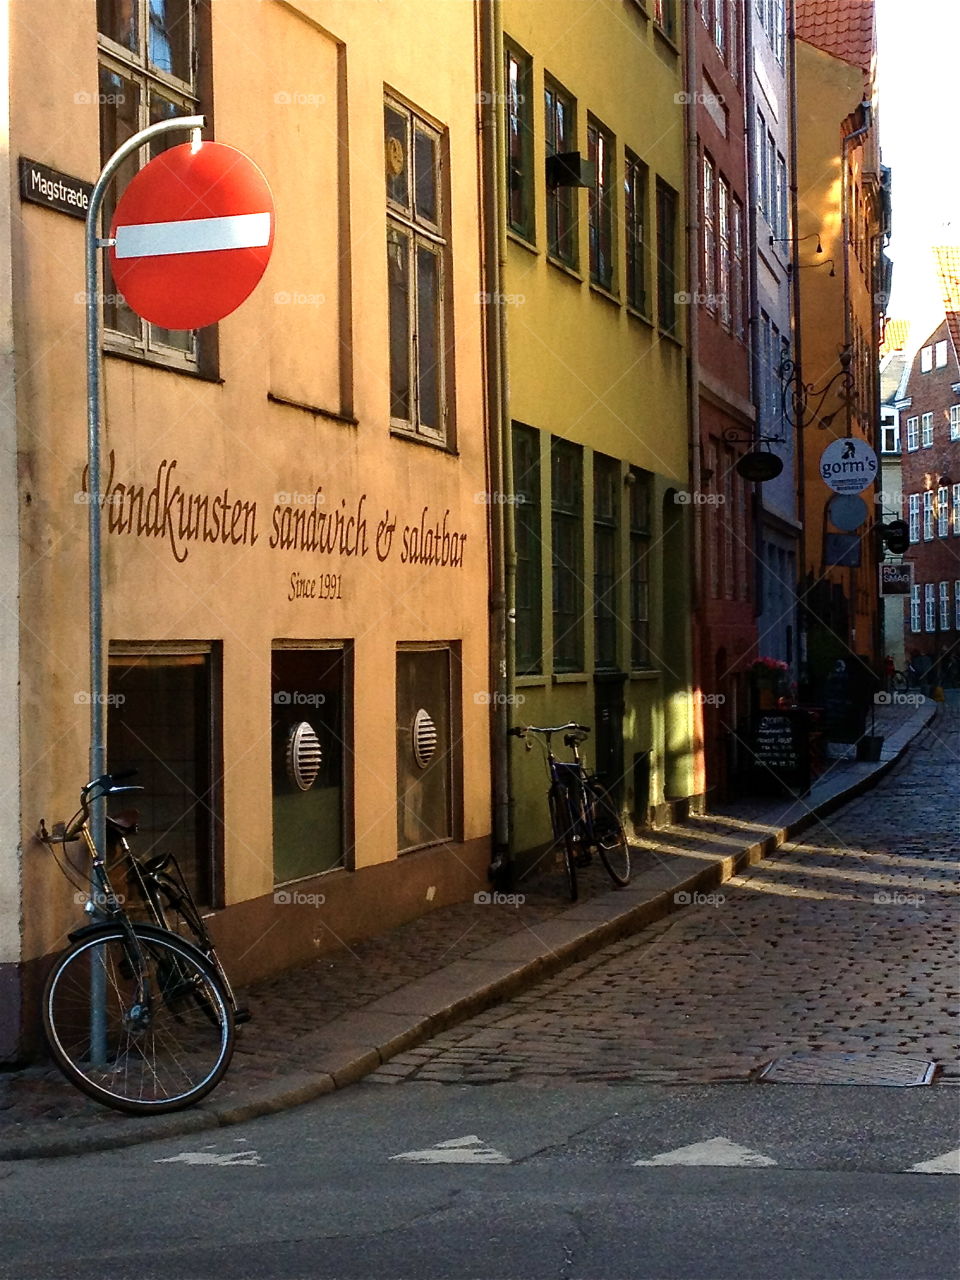 Danish street